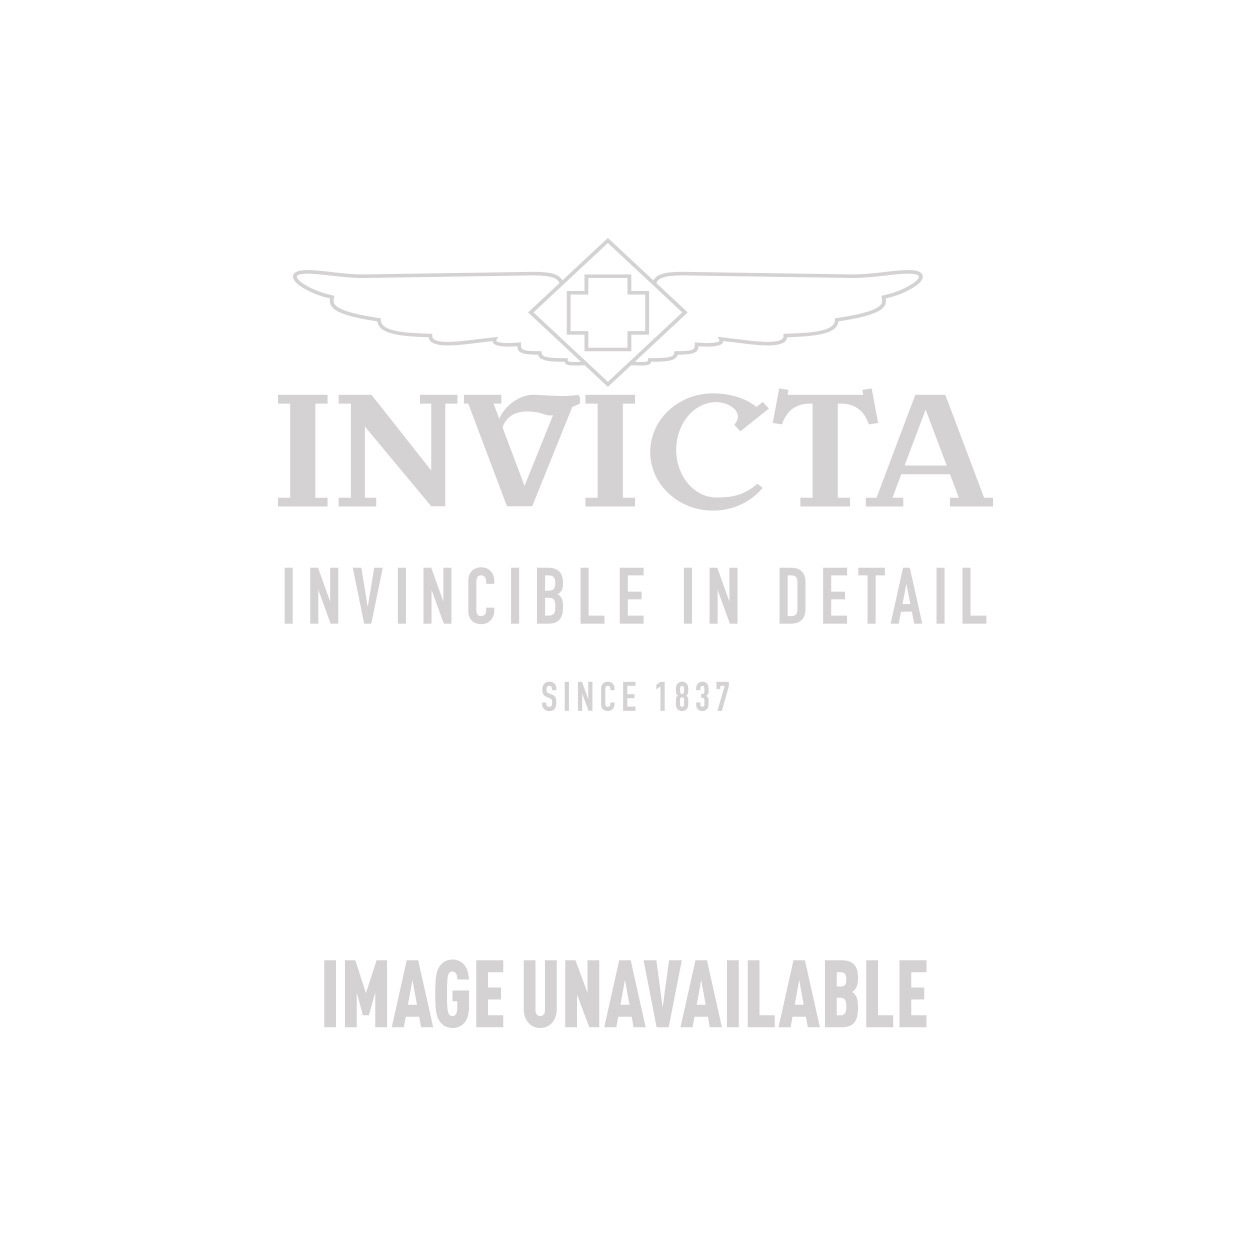 Invicta Wildflower Swiss Movement Quartz Gold Stainless Steel - Model 14873